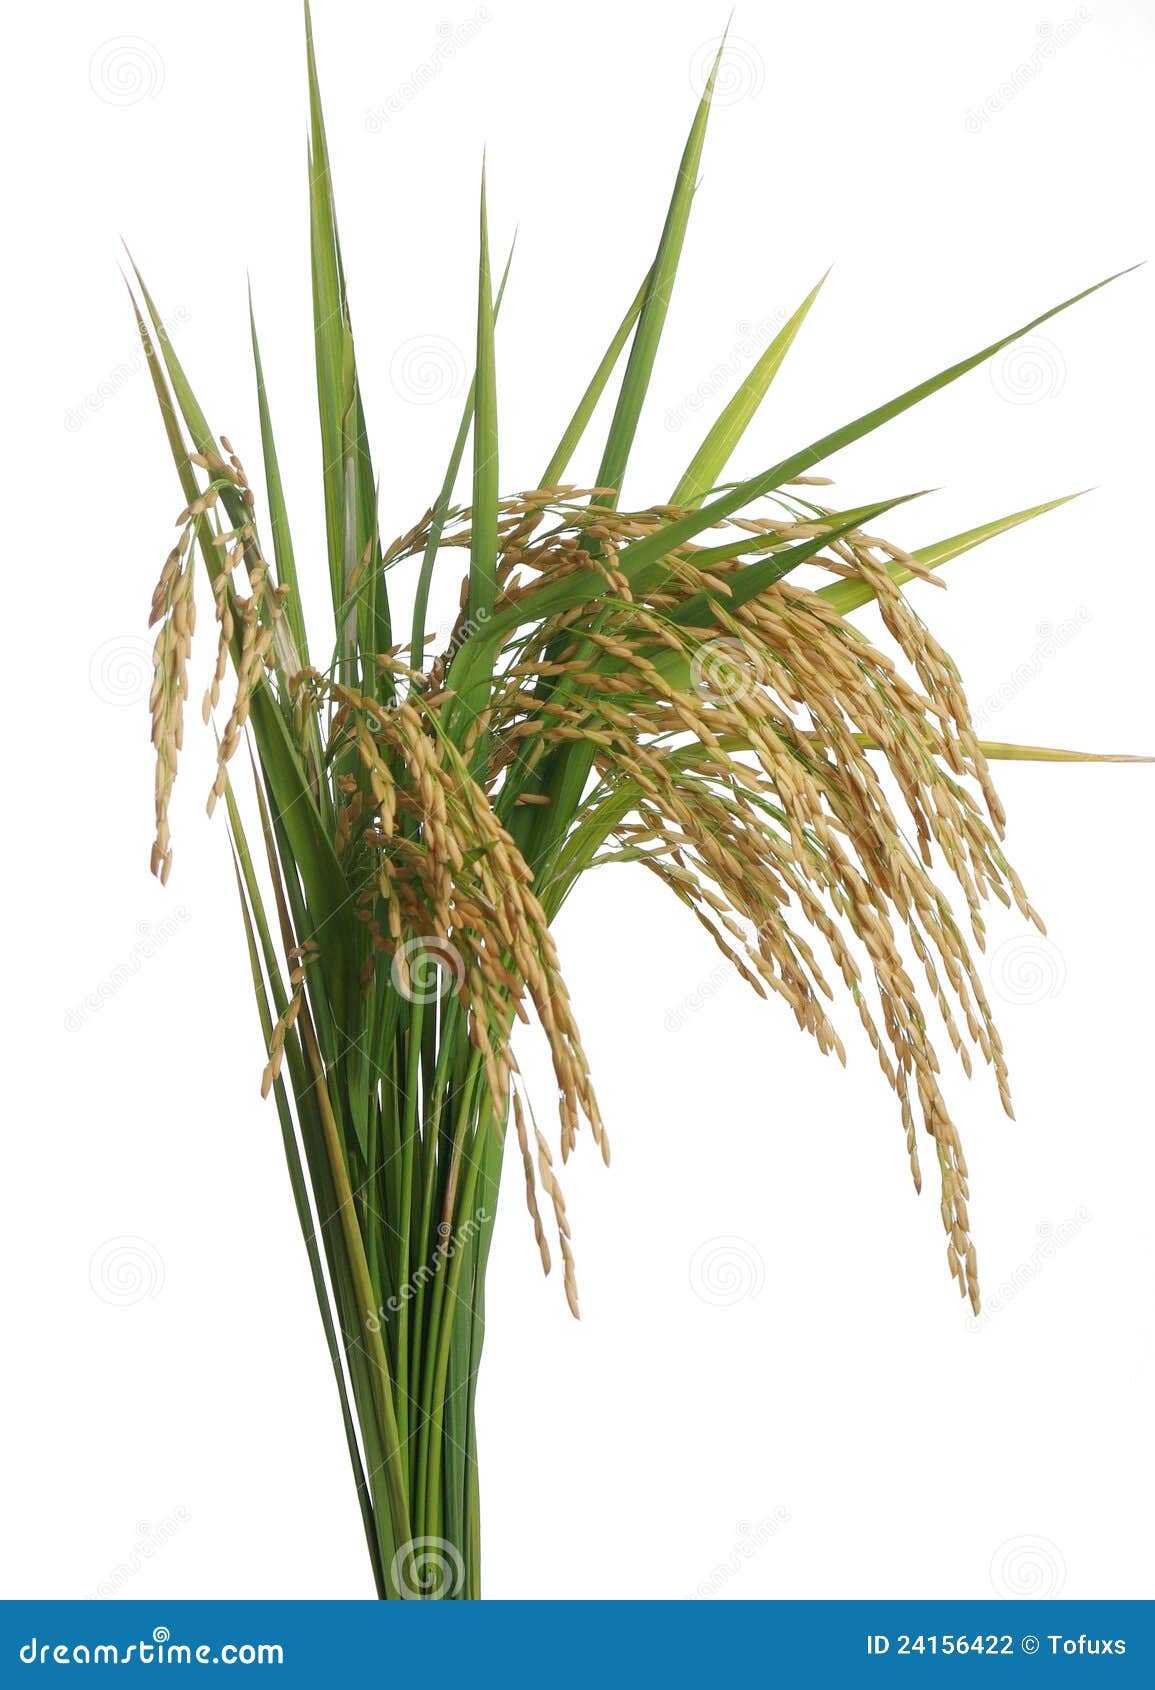 rice plant clipart - photo #22